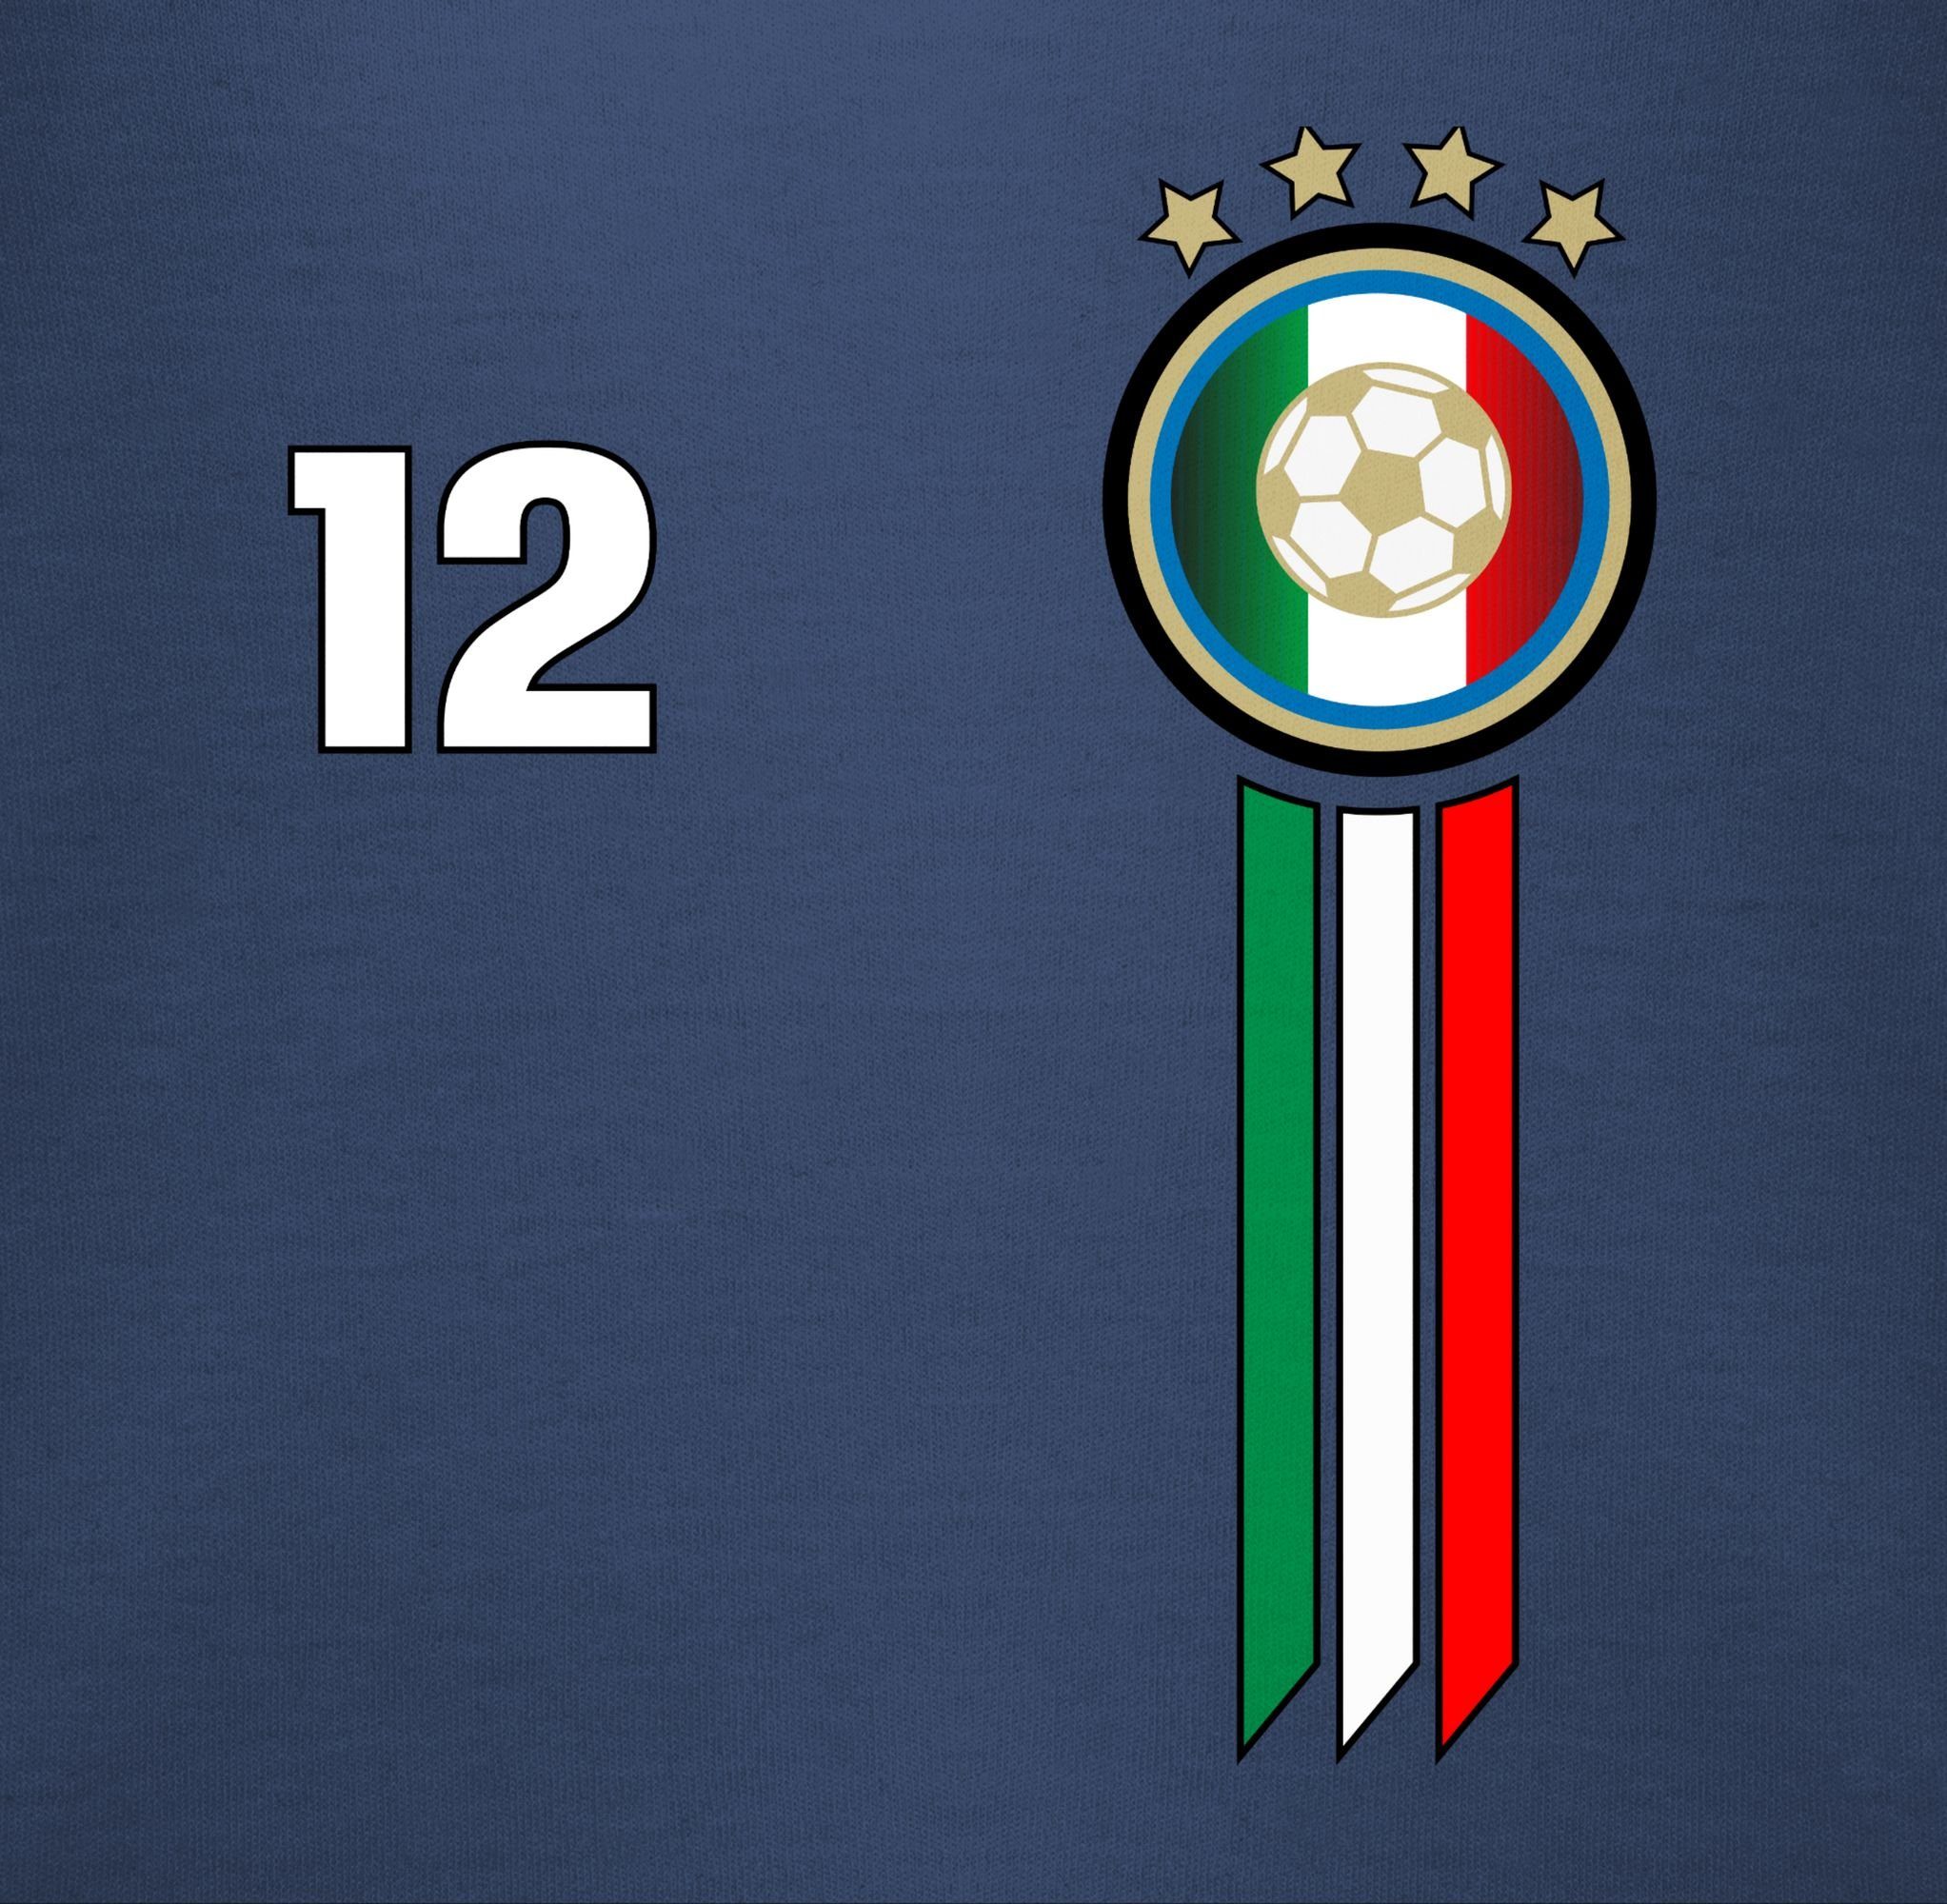 Shirtbody 2024 EM Italien 12. Fussball Shirtracer 1 Mann Blau Baby Emblem Navy